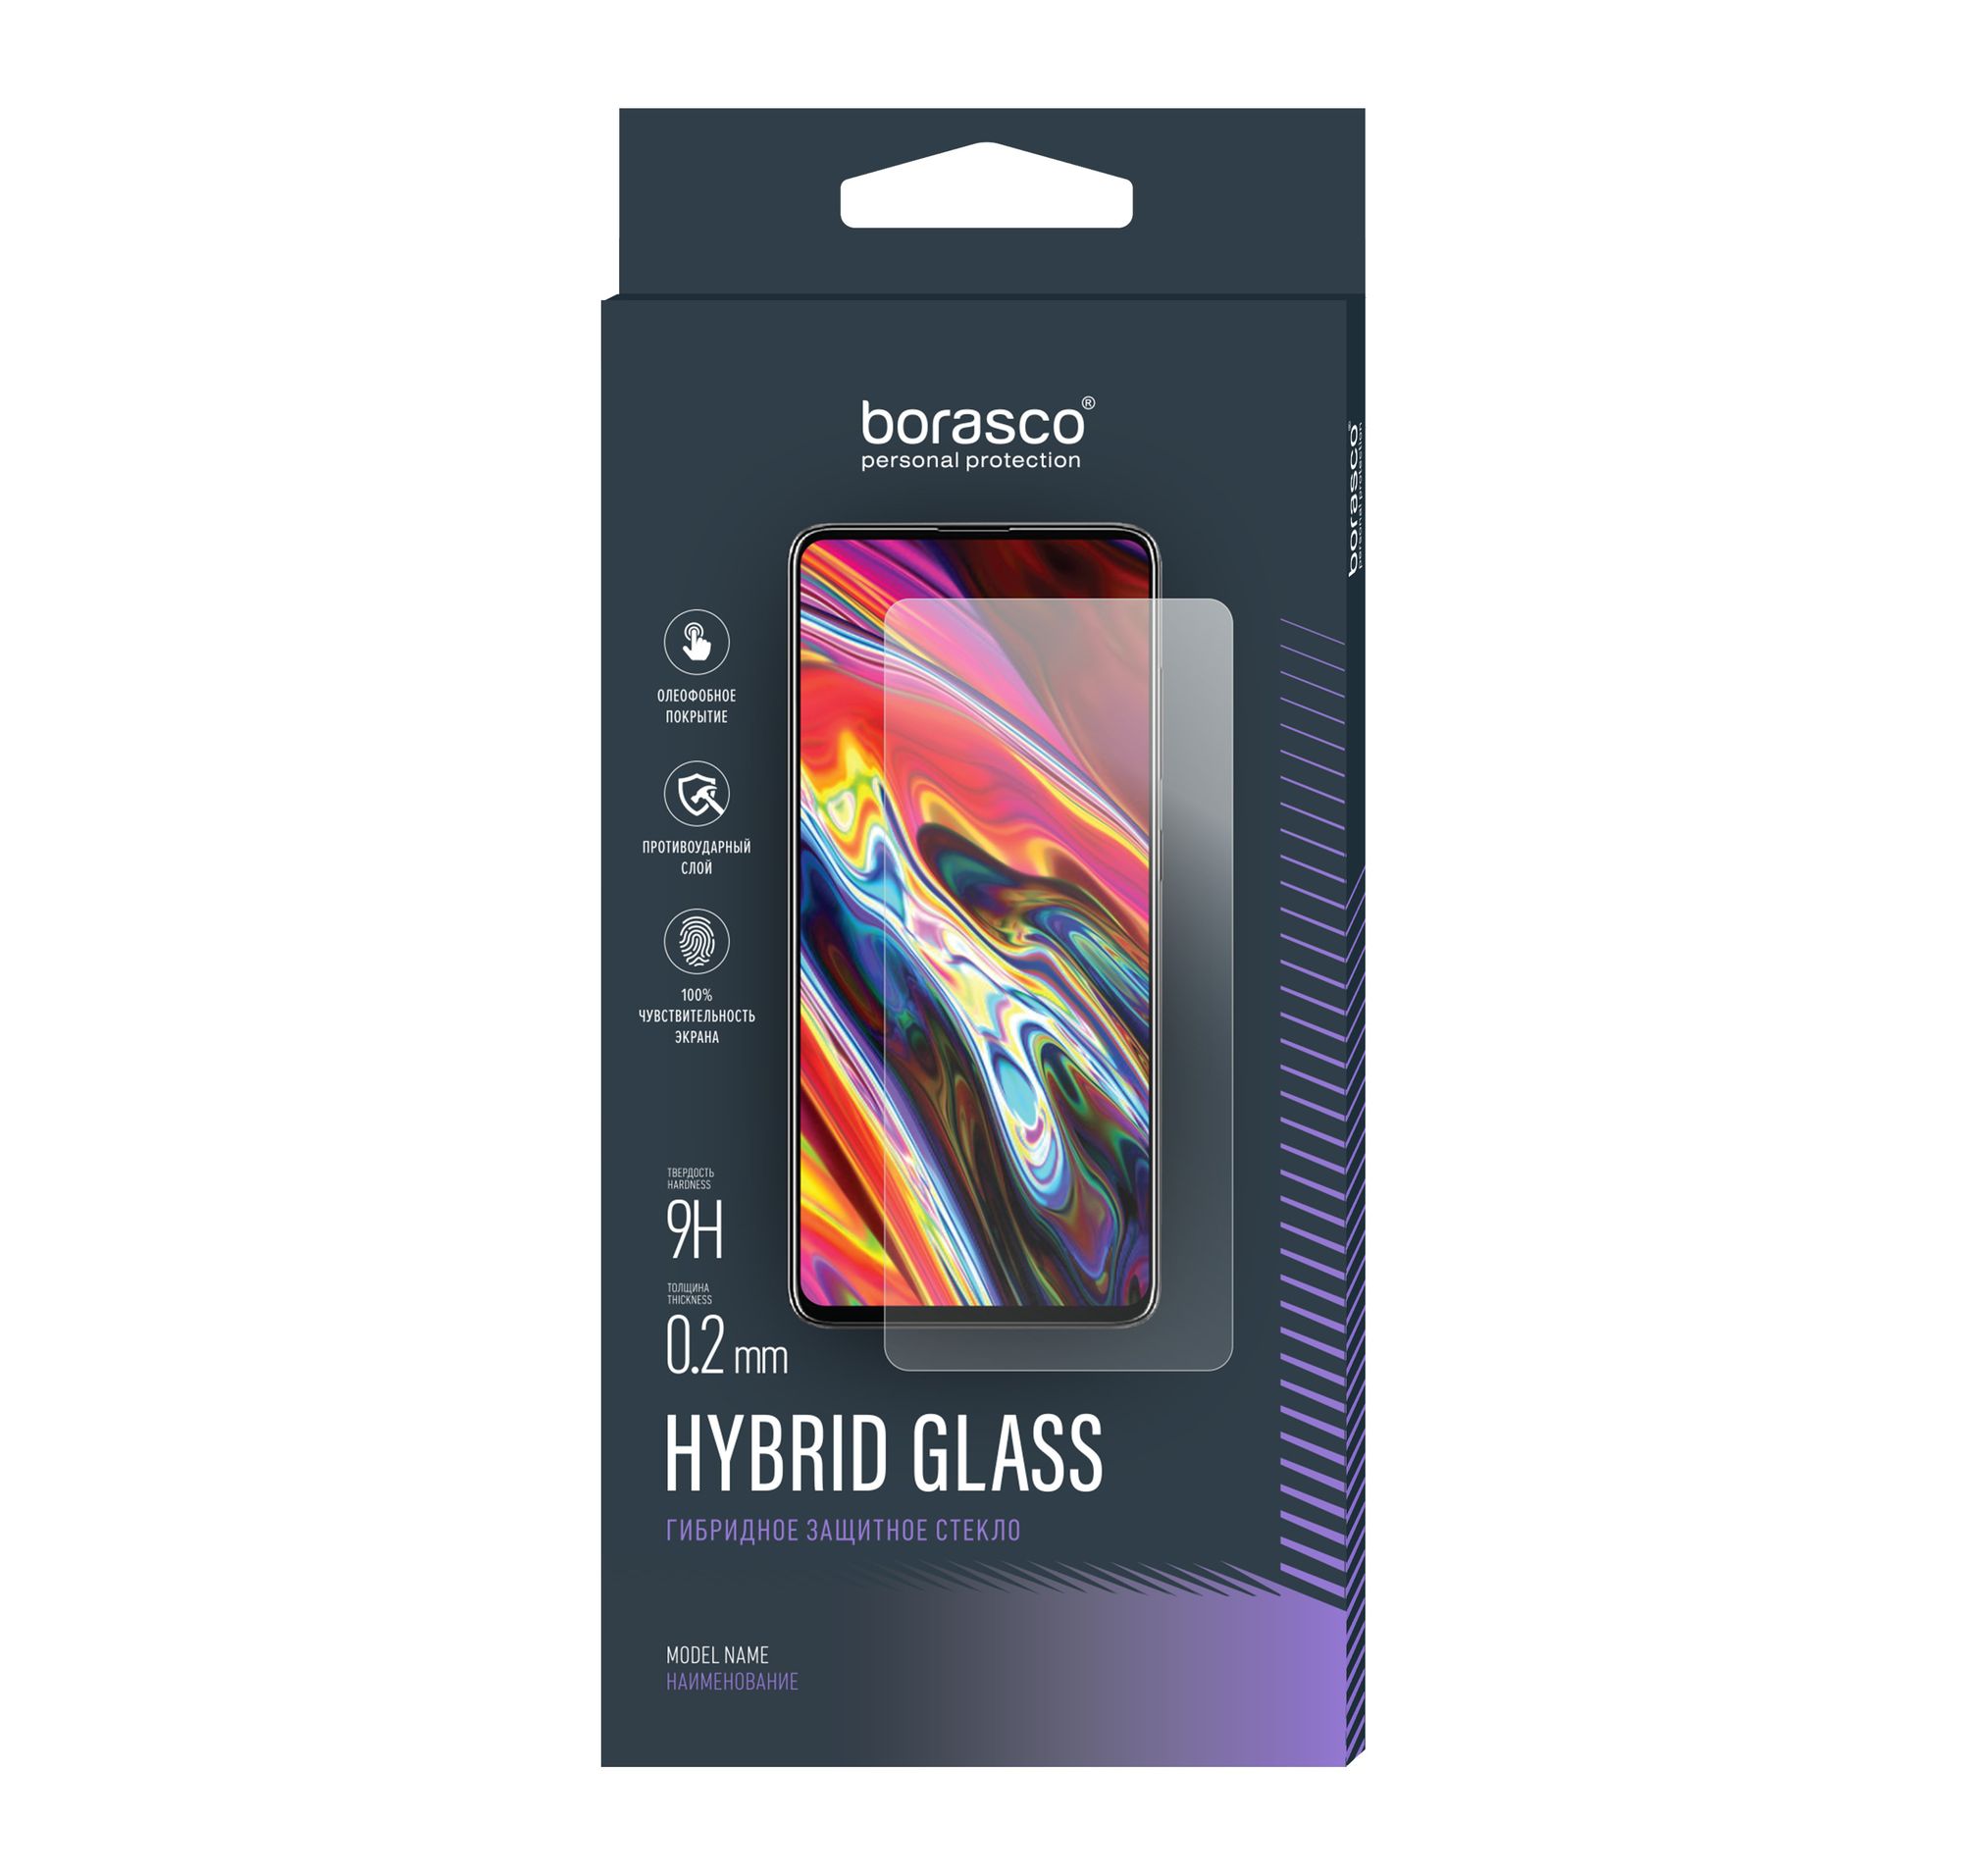 Стекло защитное Hybrid Glass VSP 0,26 мм для Huawei Y6 (2019)/ Honor 8A стекло защитное mediagadget huawei y6 2018 hybrid прозрачное